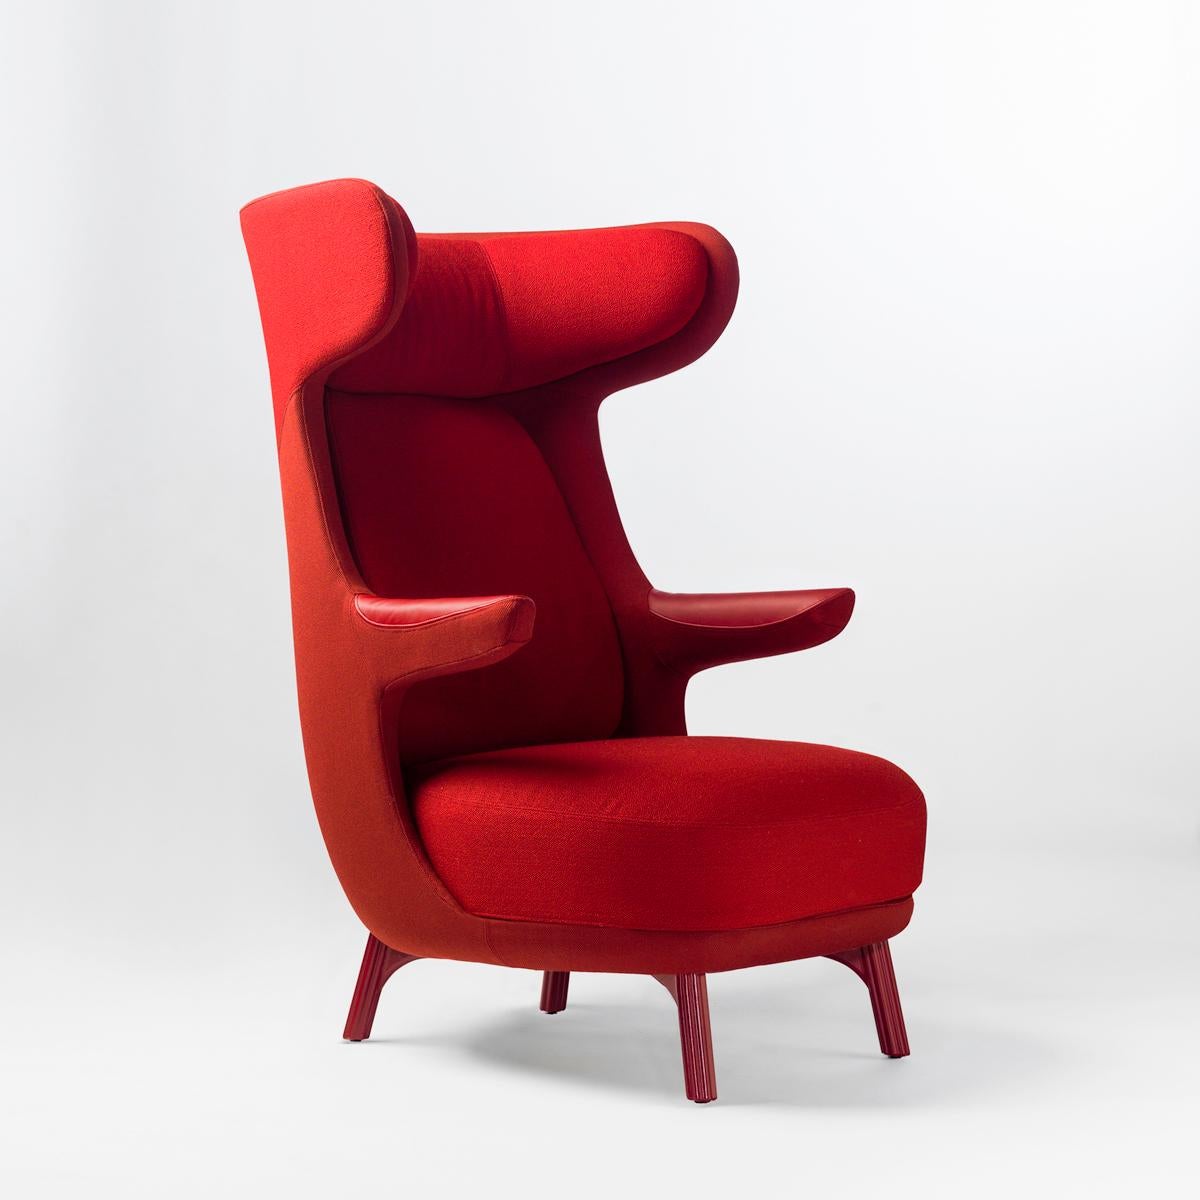 Spanish Jaime Hayon, Monocolor Red Fabric Leather Upholstery Dino Armchair 